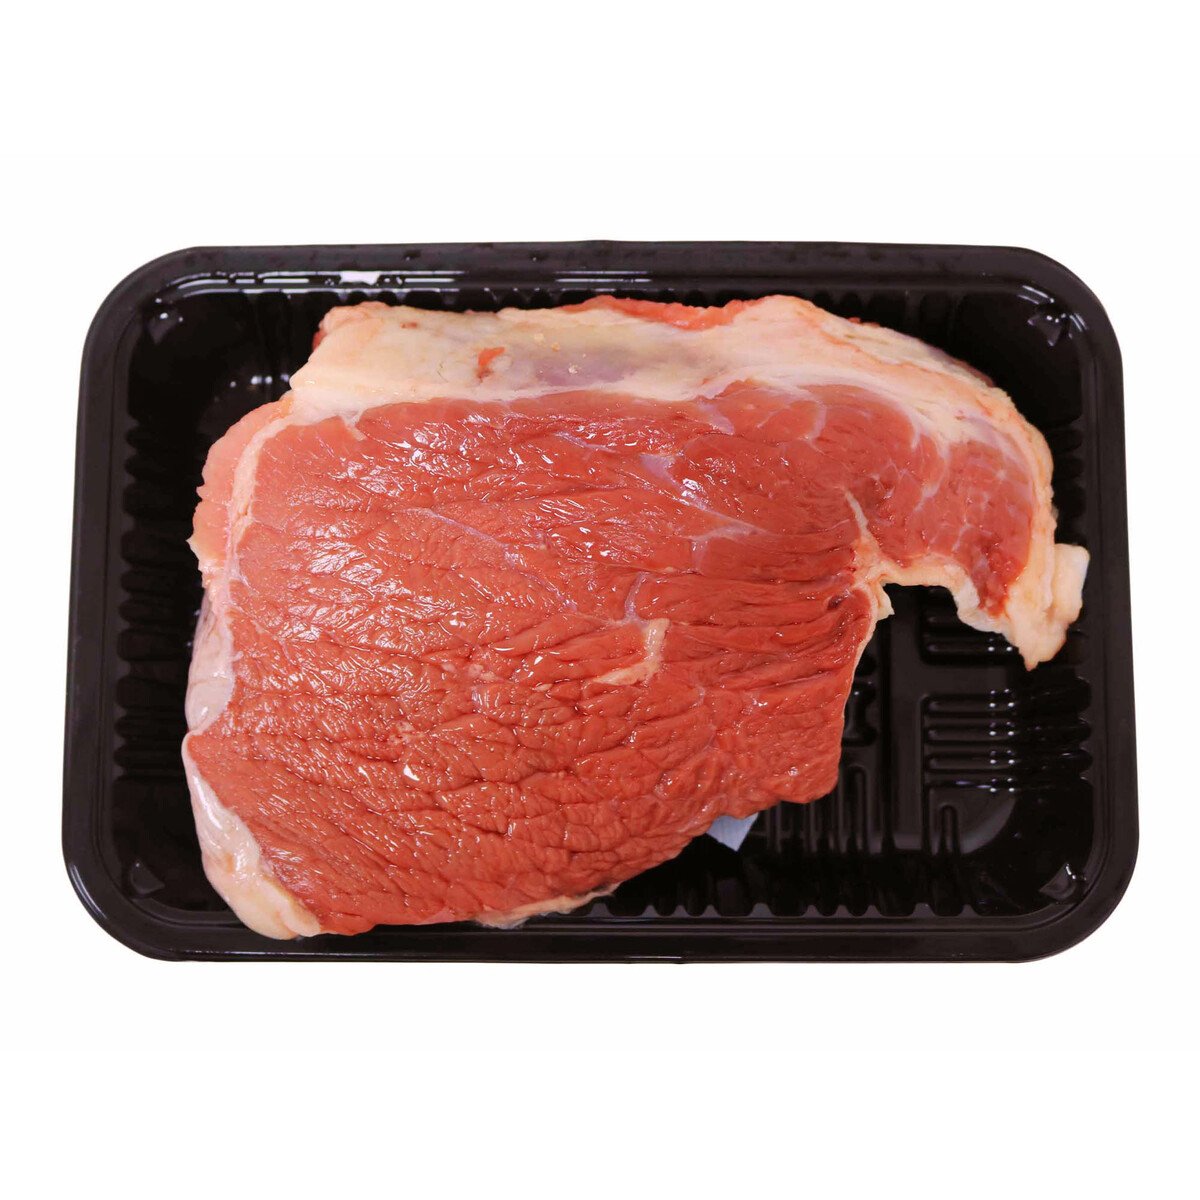 Local Beef Silverside Roast 500g Approx Weight